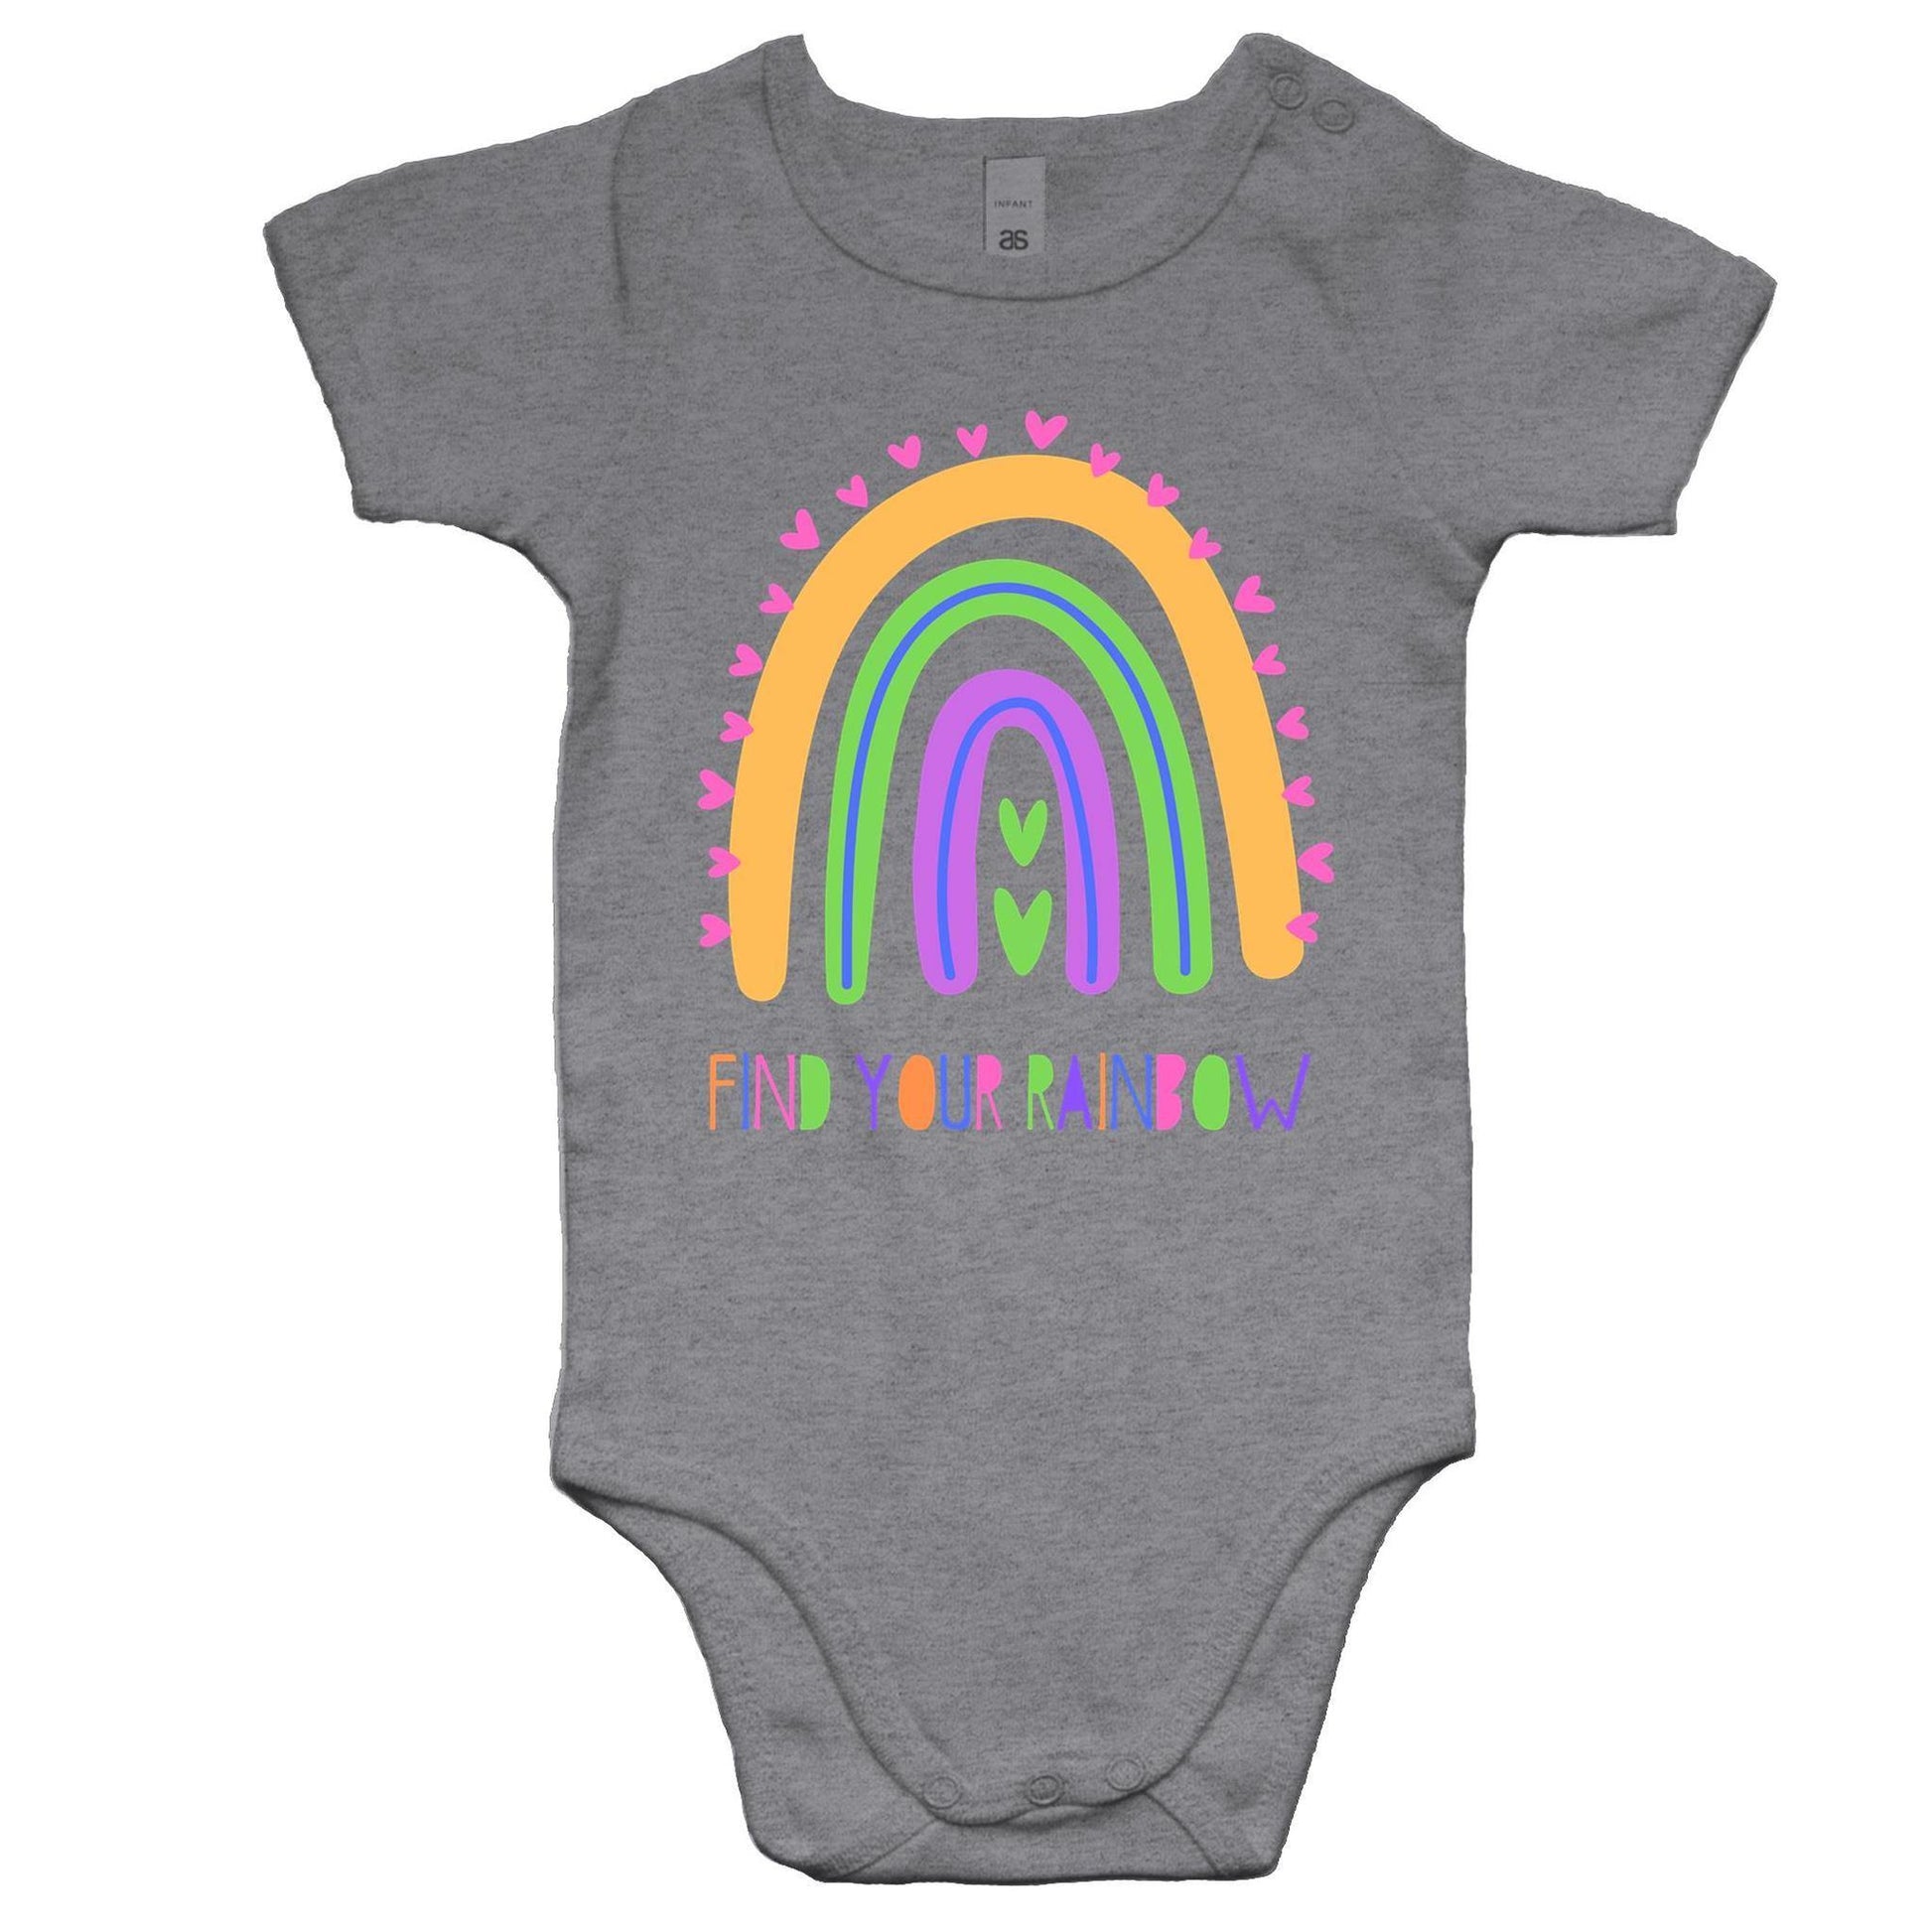 Find Your Rainbow - Baby Bodysuit Grey Marle Baby Bodysuit kids